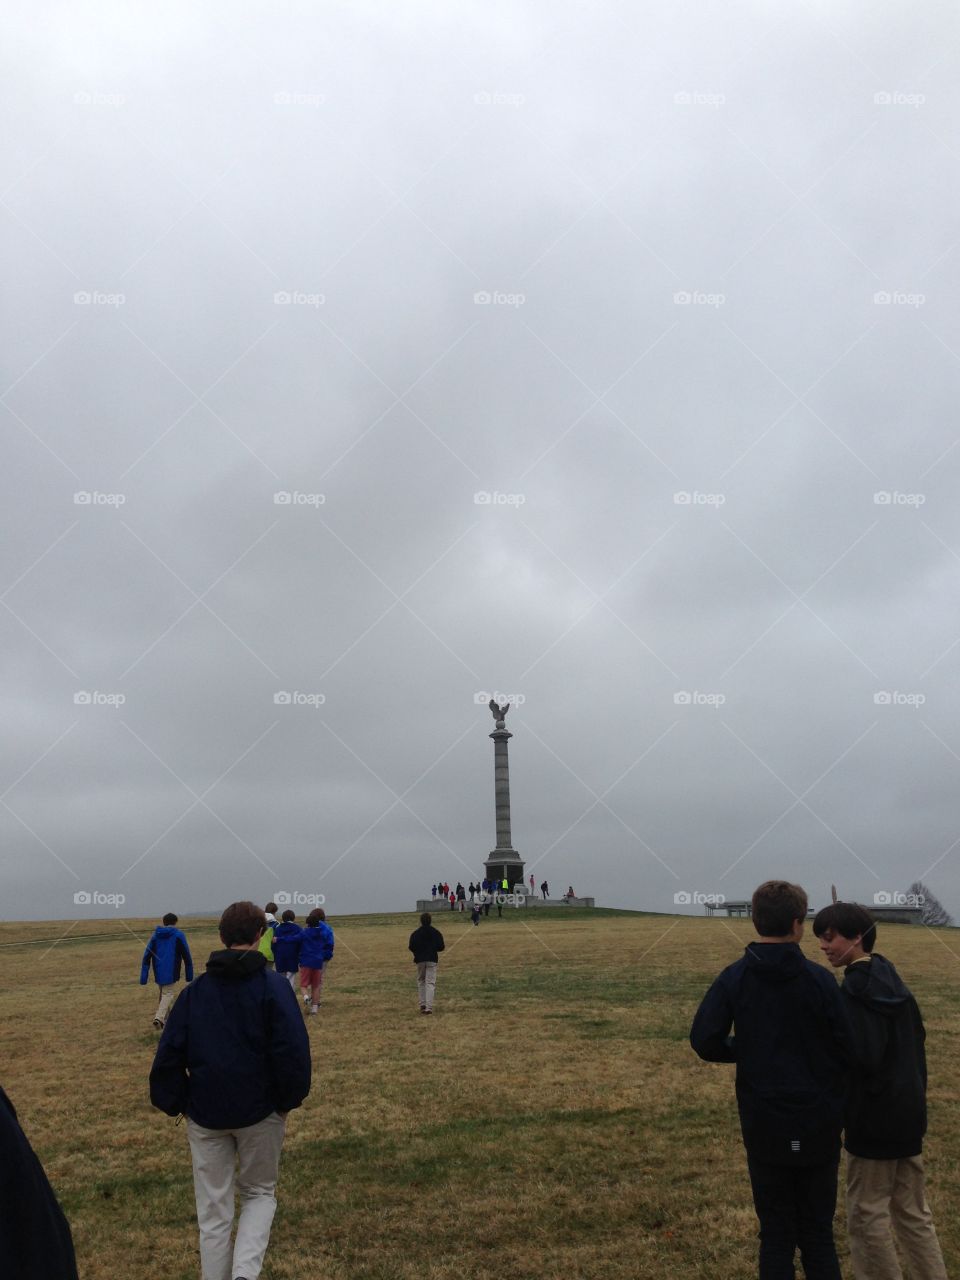 Gettysburg field trip school . Gettysburg field trip with school. Cloudy sky, clouds, statue. 